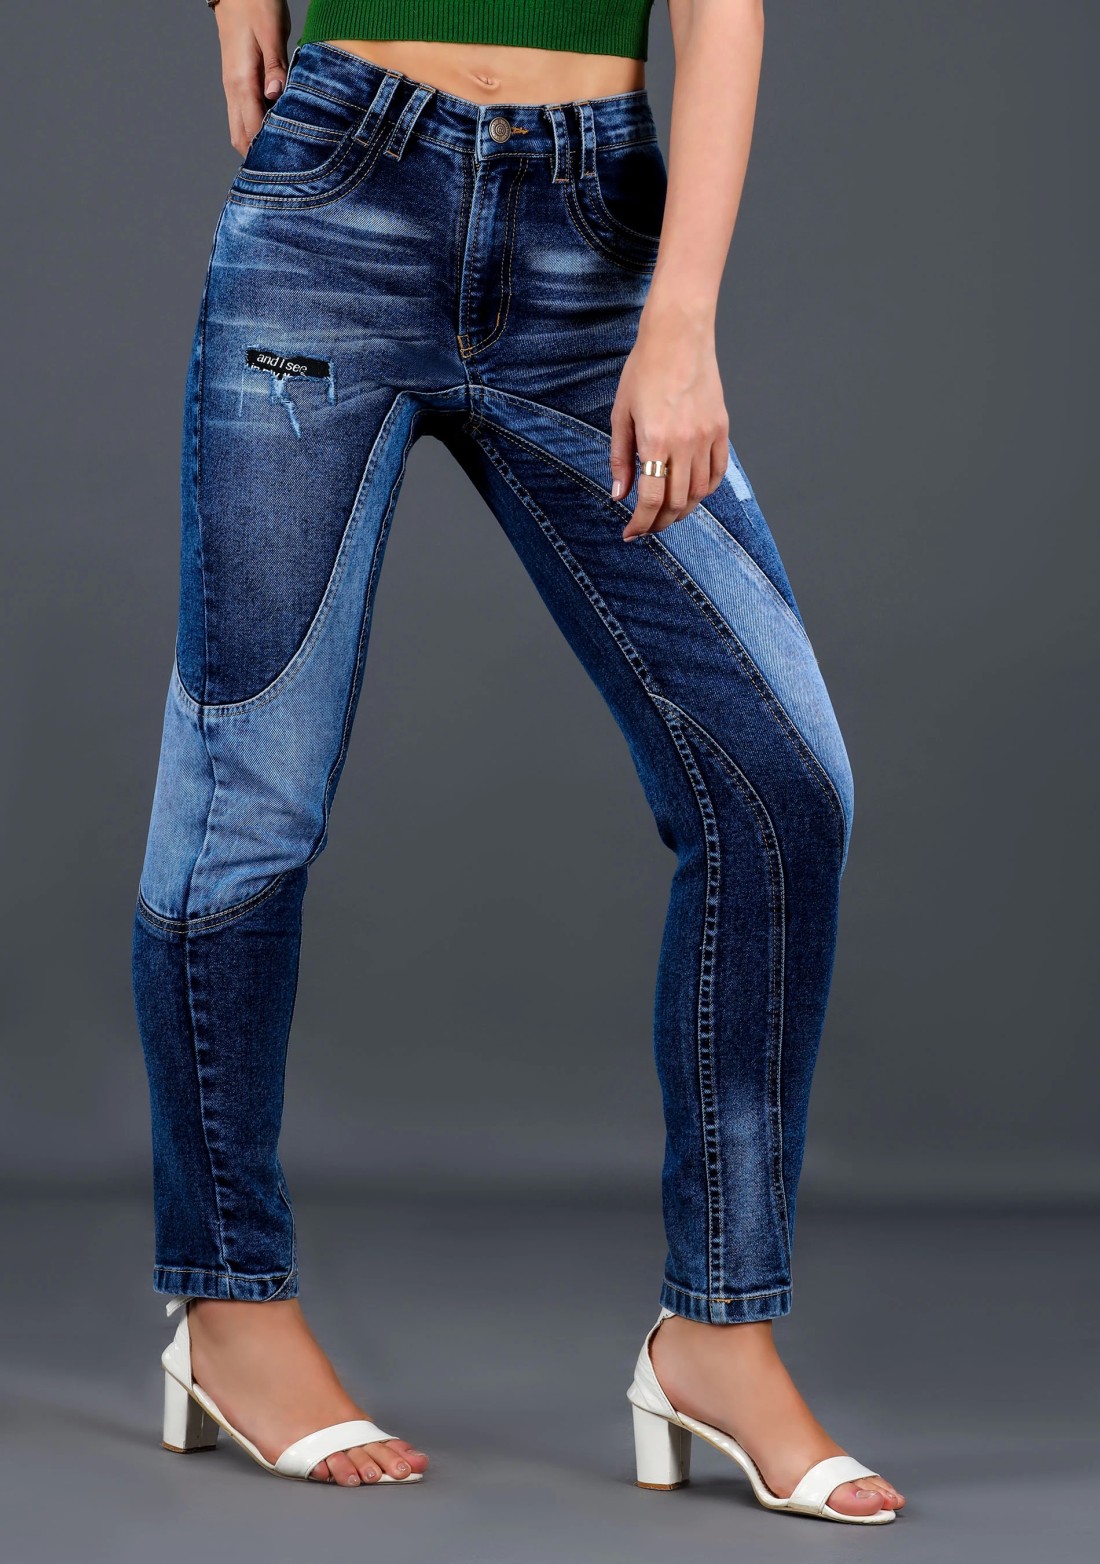 Blue Slim Fit Rhysley Women's Fashion Jeans